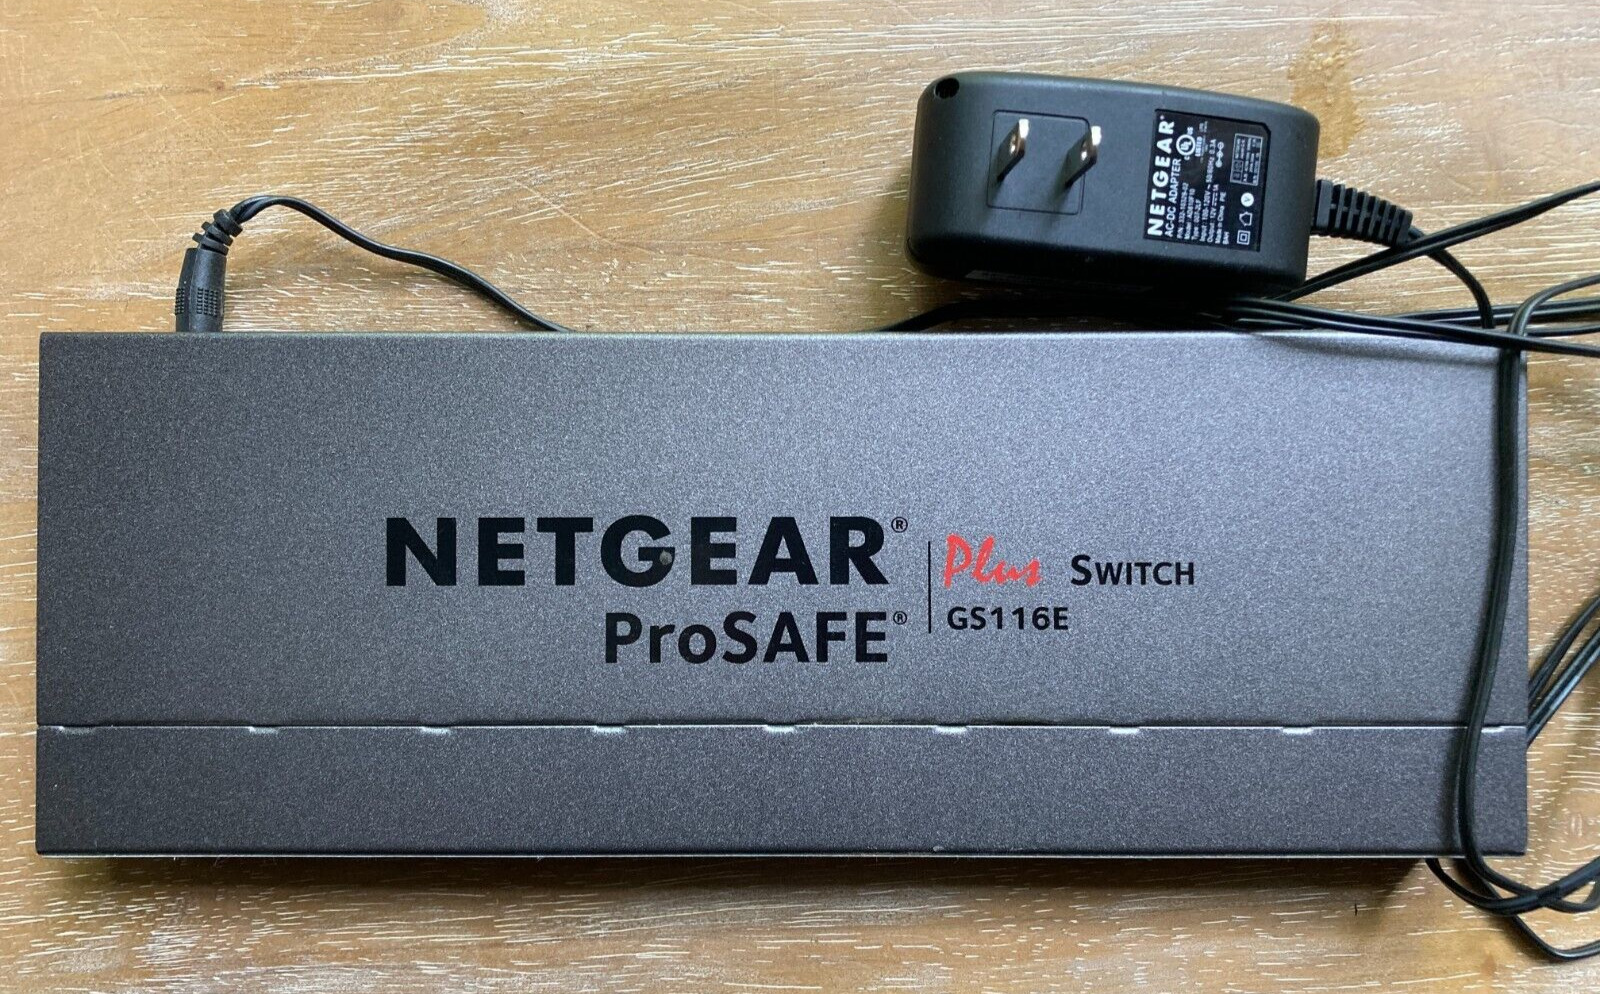 Netgear ProSAFE Plus 16 Port Gigabit Switch *Used*  GS116Ev2 with Adapter